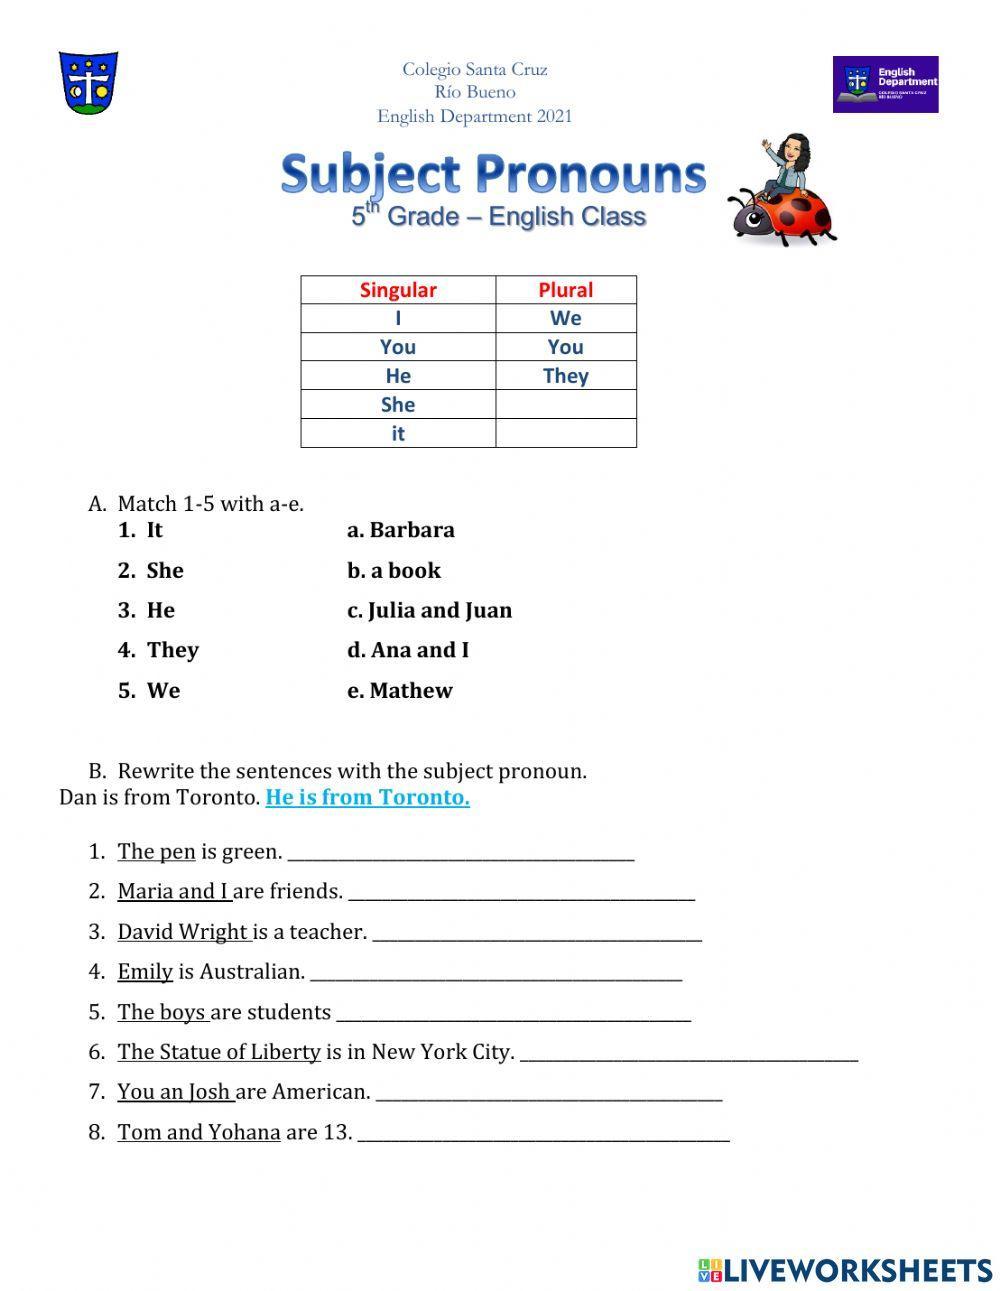 Subject pronouns 5th grade